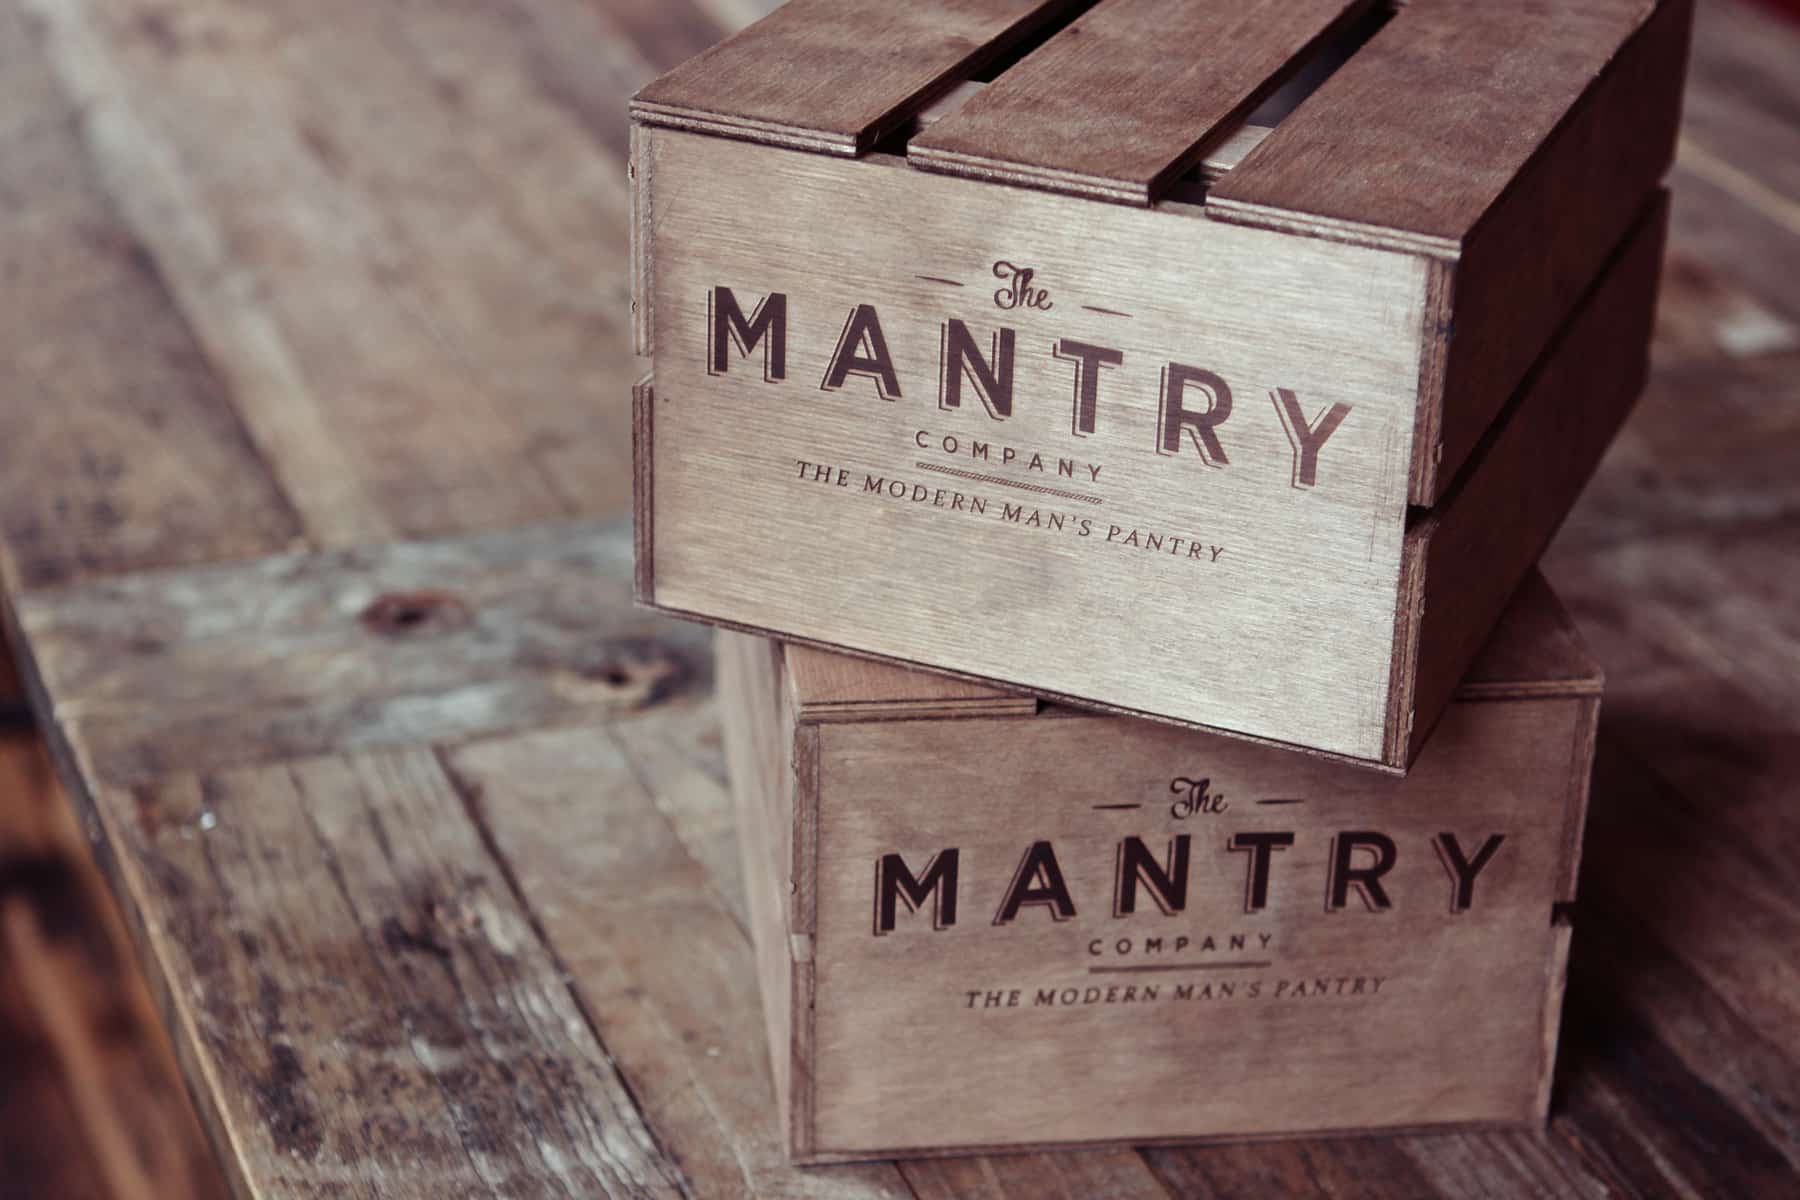 manrty - a modern man's panrty - valentines gift (2)